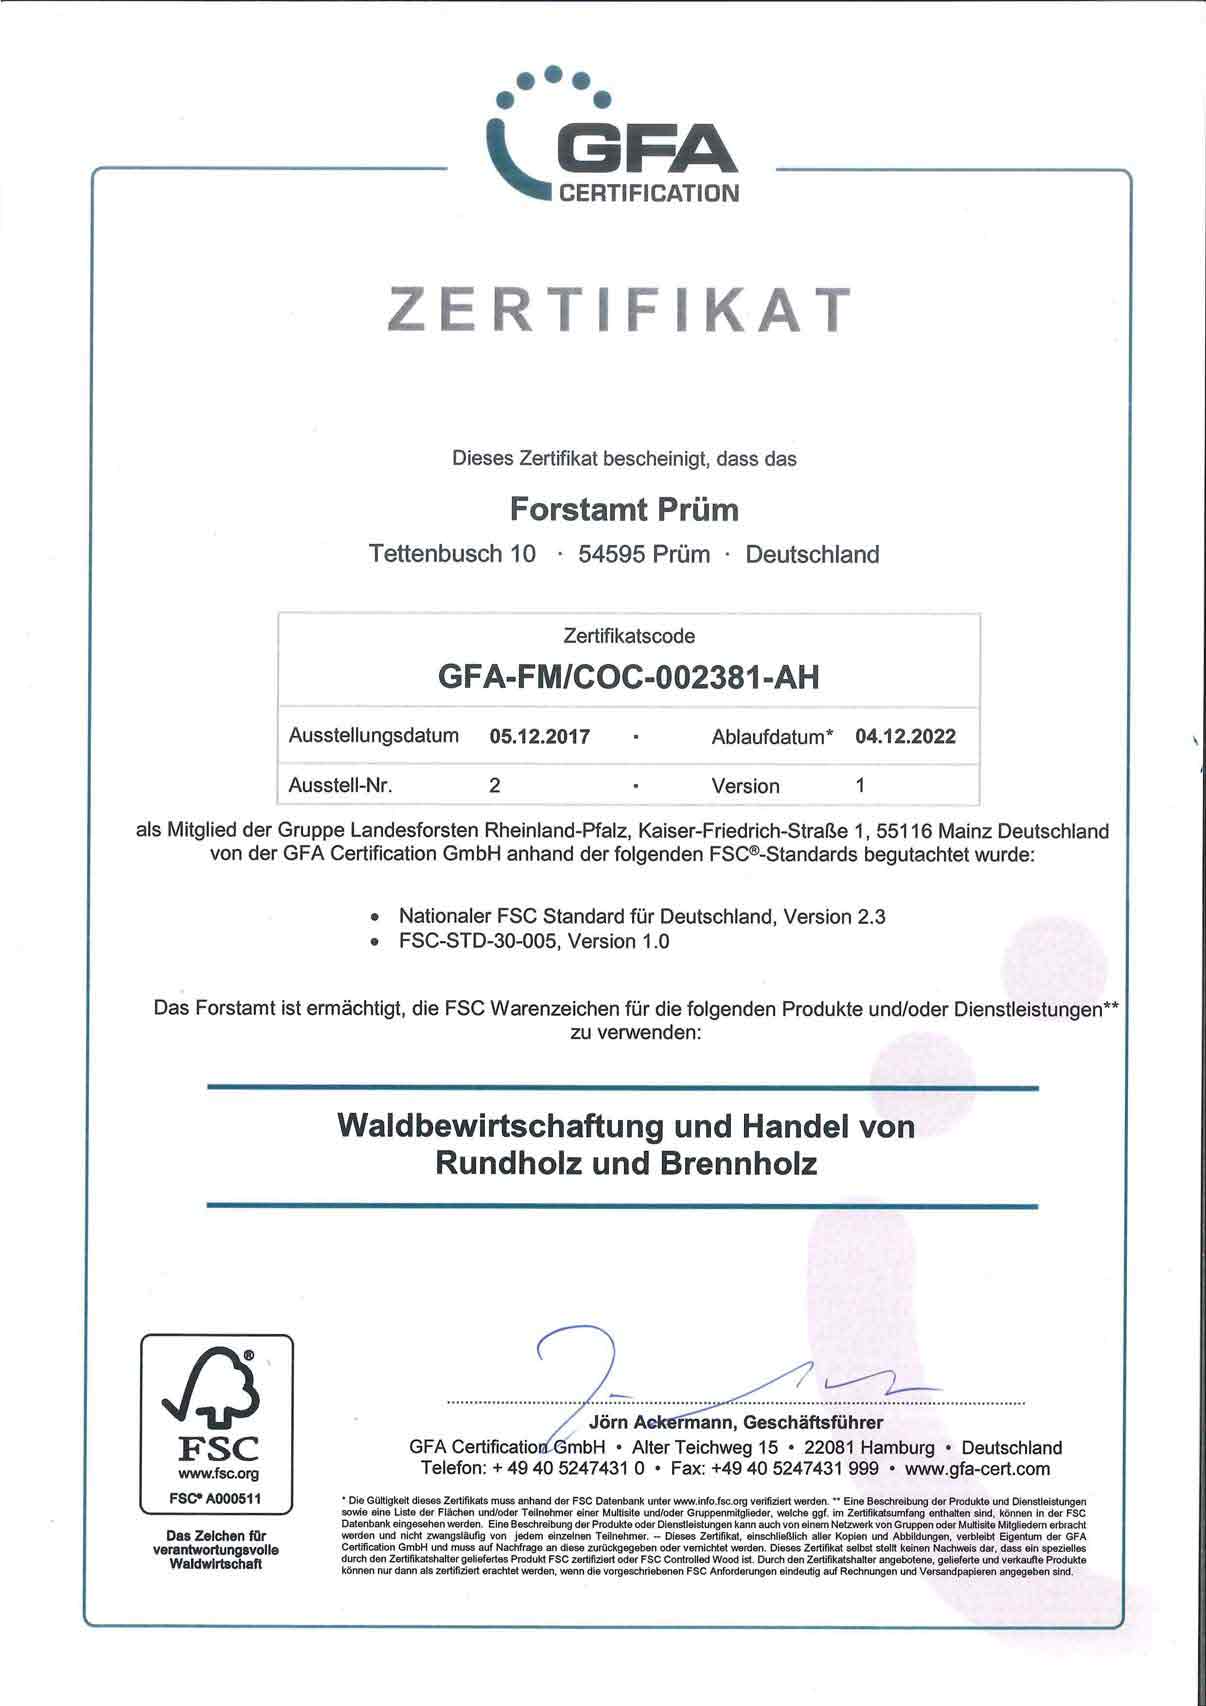 FSC ® Zertifikat Staatswald Forstamt Prüm